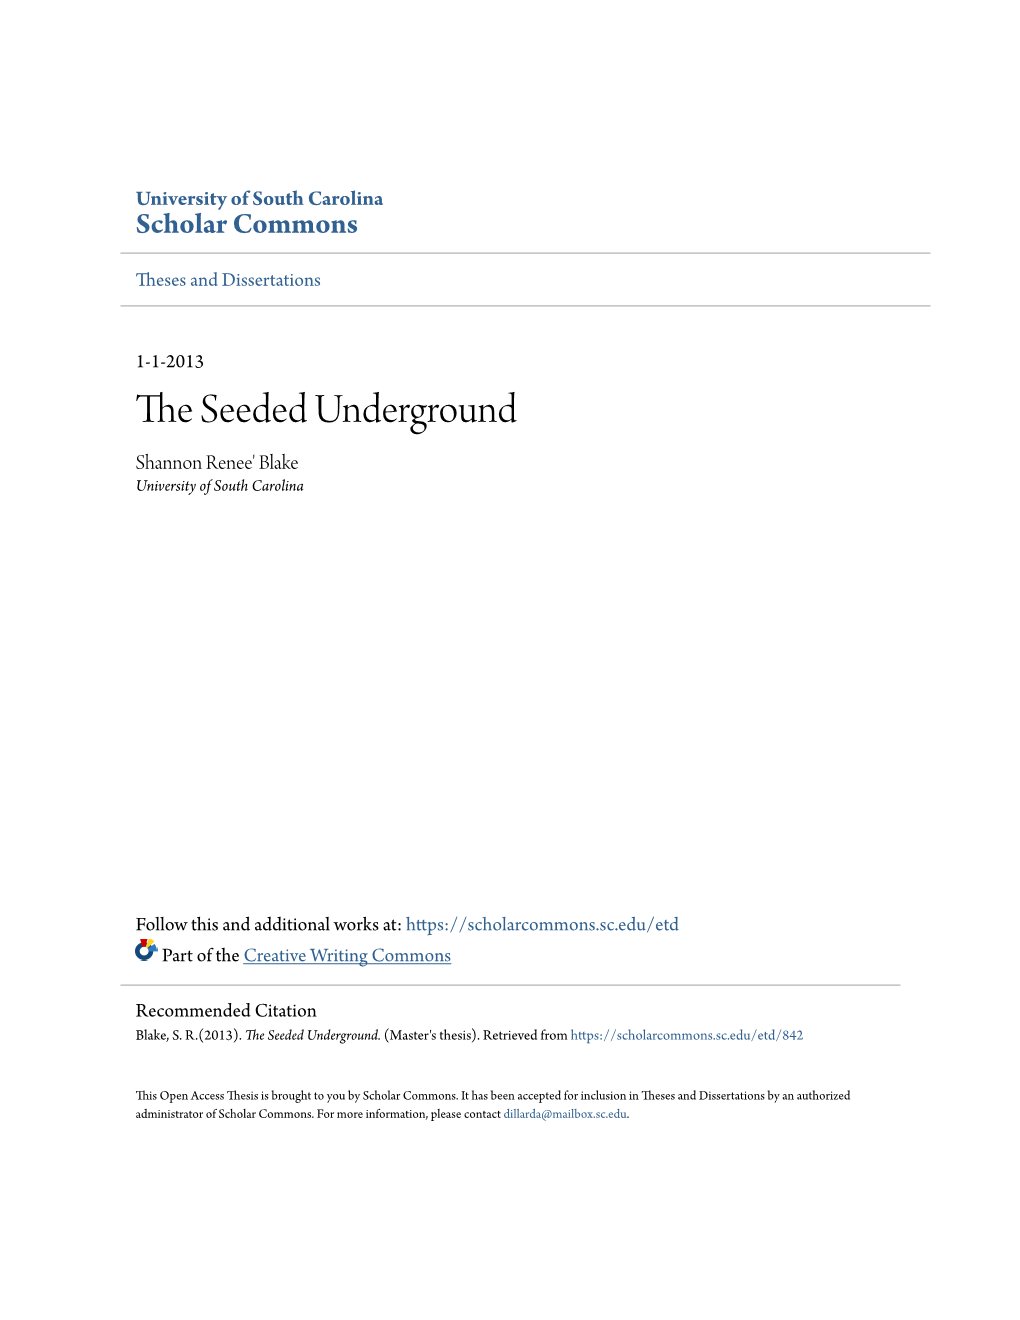 The Seeded Underground